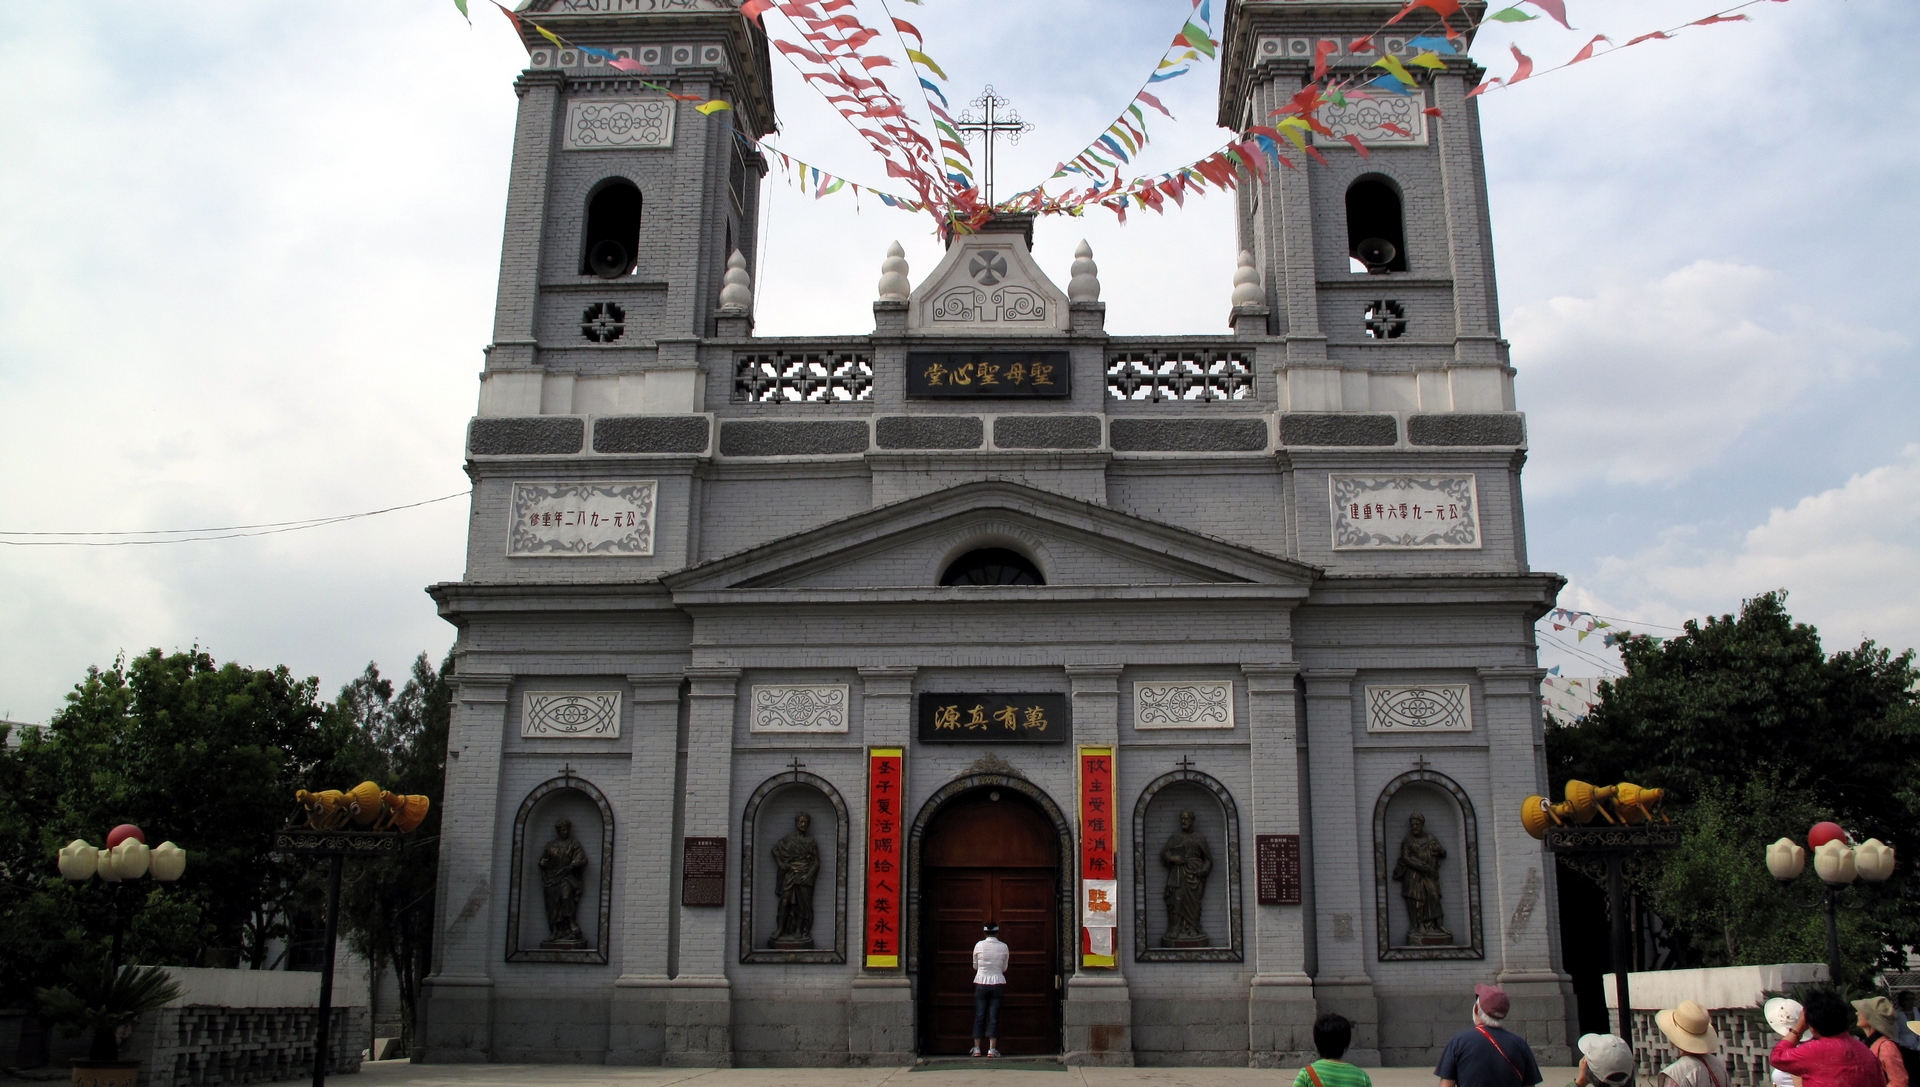 La cathédrale de Datong, au nord de la Chine | wikimedia commons G41rn8 CC.BY.SA.4.0